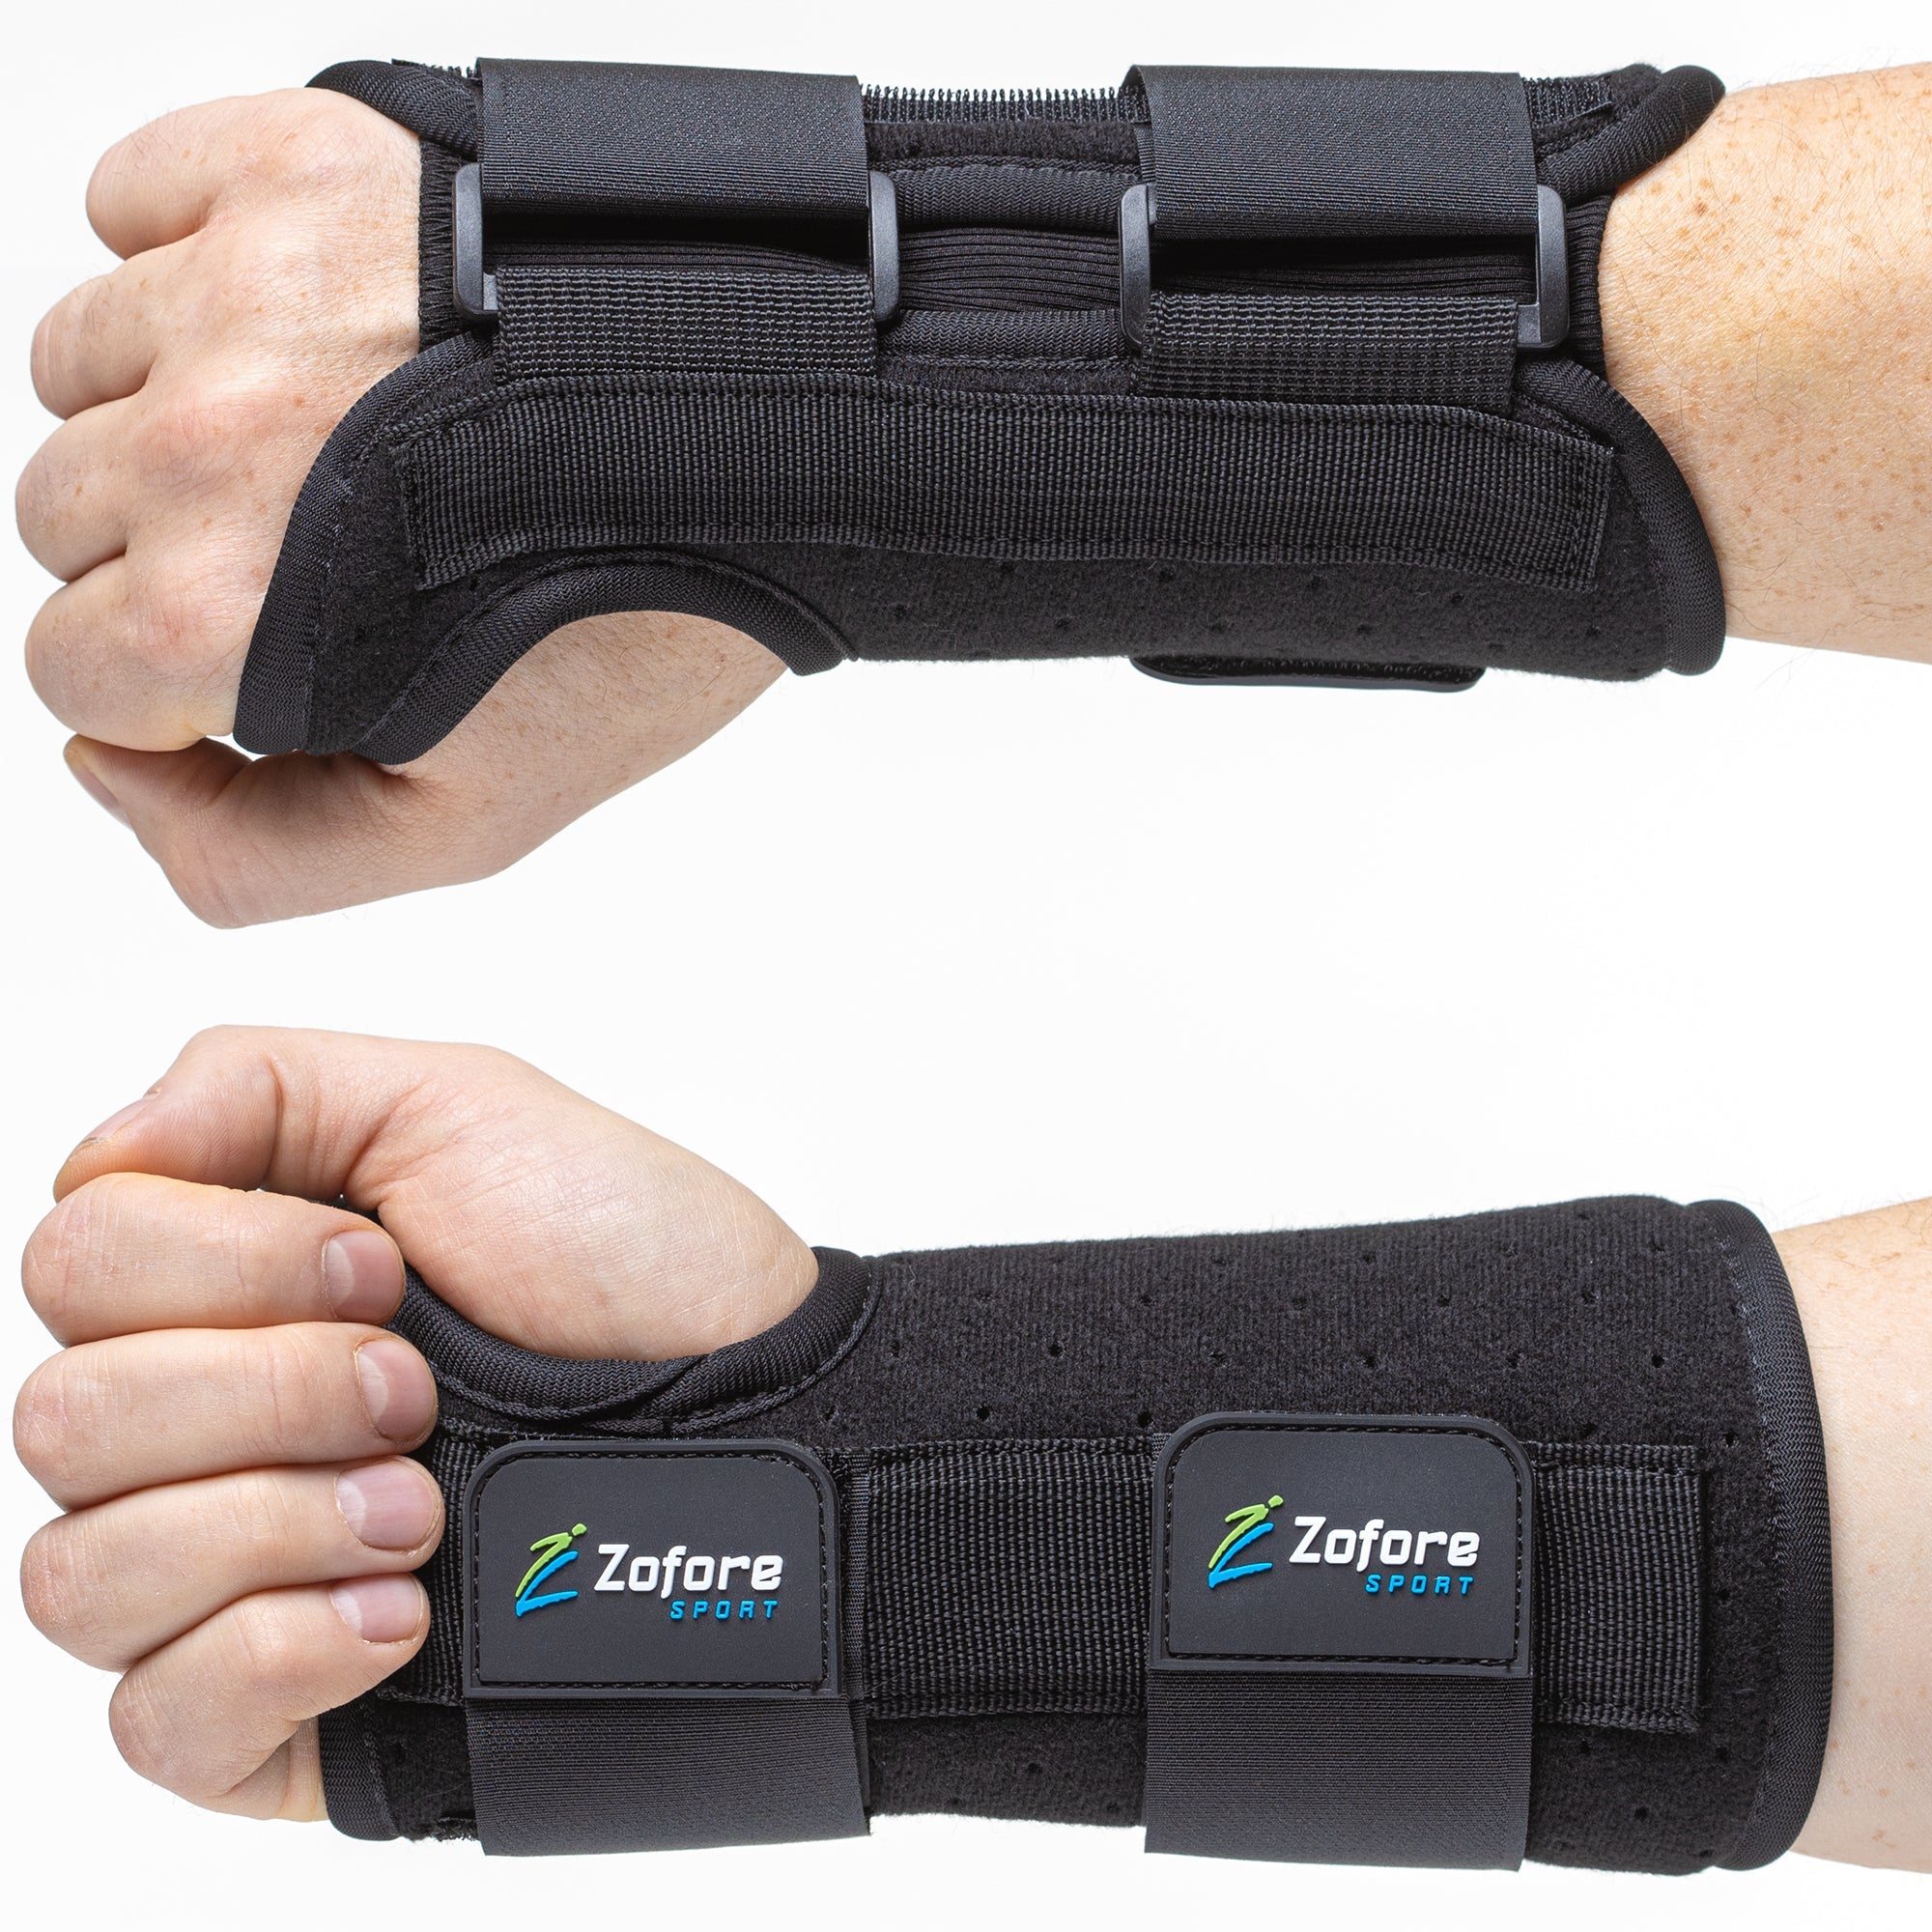 Night Sleep Splint Wrist Brace Support Breathable Treat Wrist Pain Washable